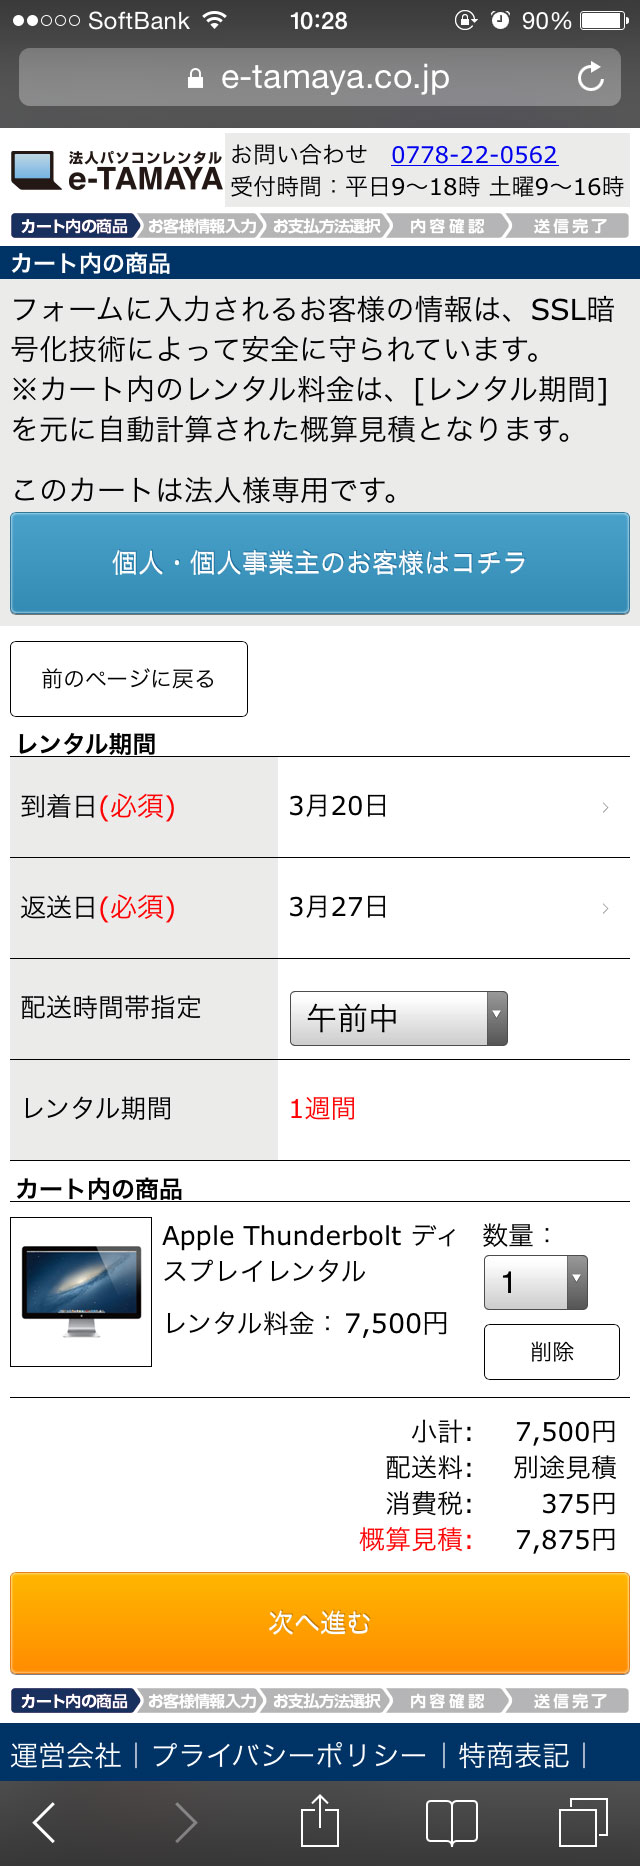 http://e-tamaya.sakura.ne.jp/%E5%86%99%E7%9C%9F-2014-03-20-10-28-04.jpg